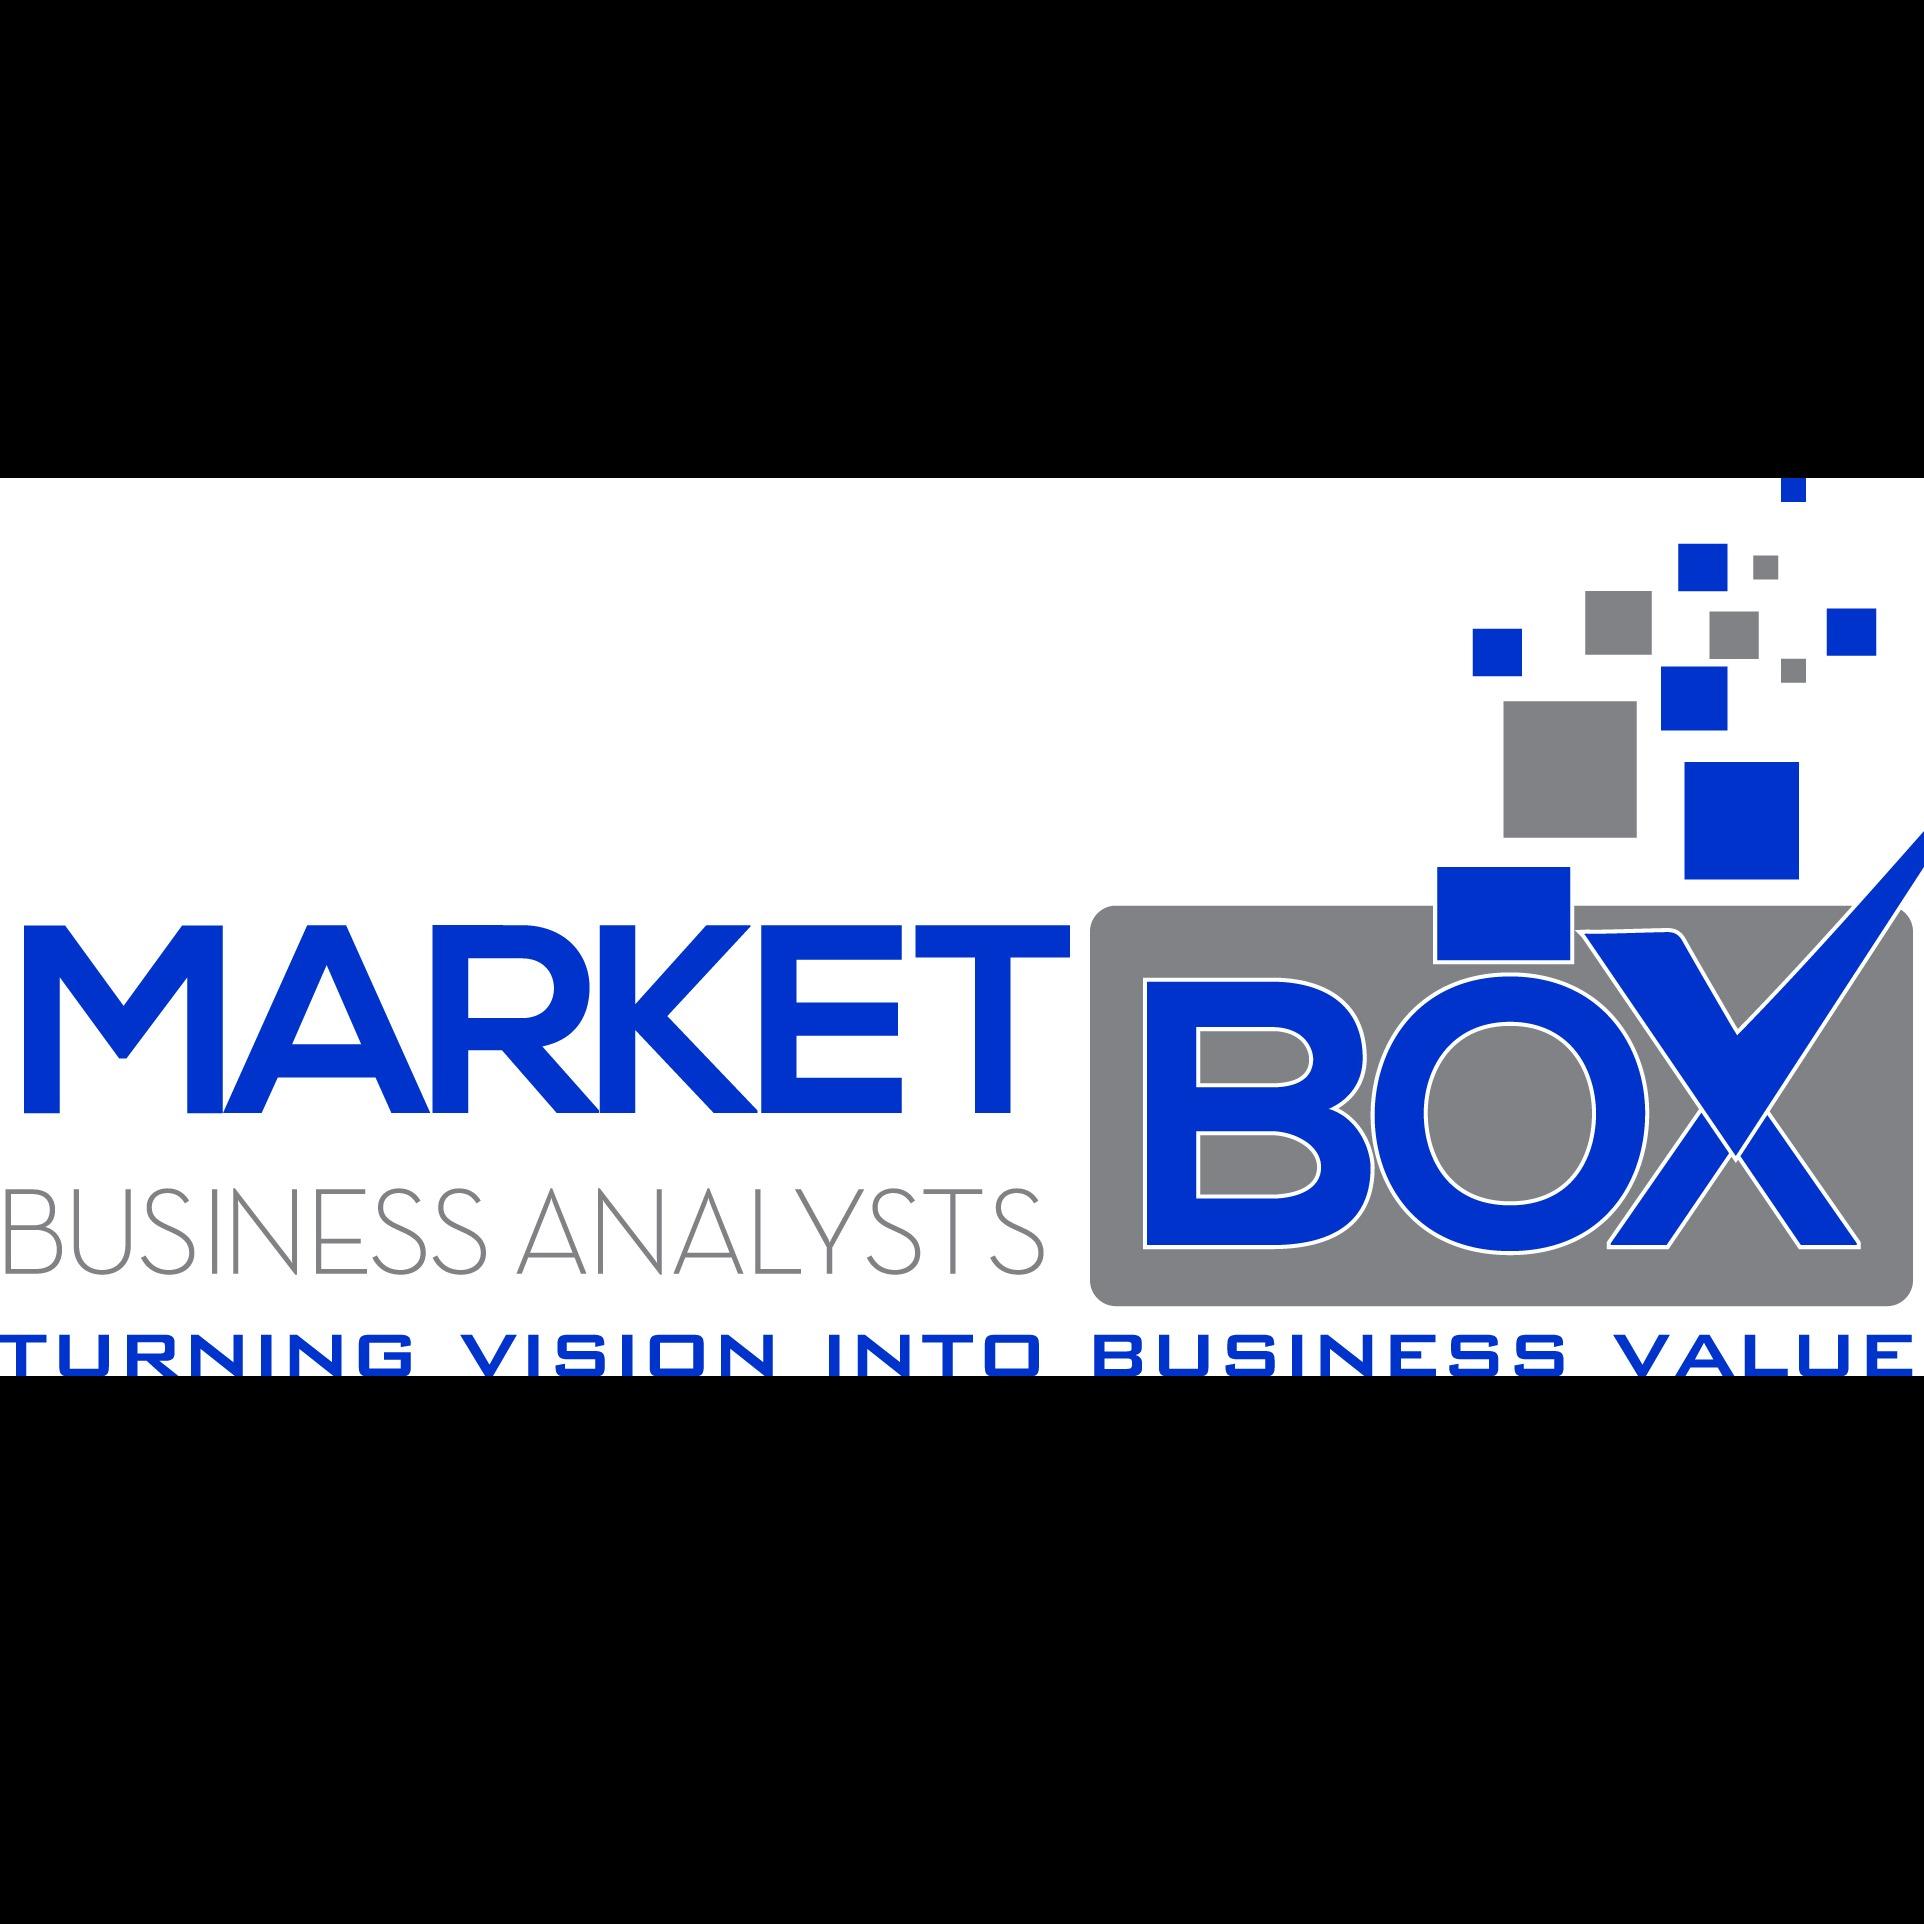 Marketbox Business Analysts Logo